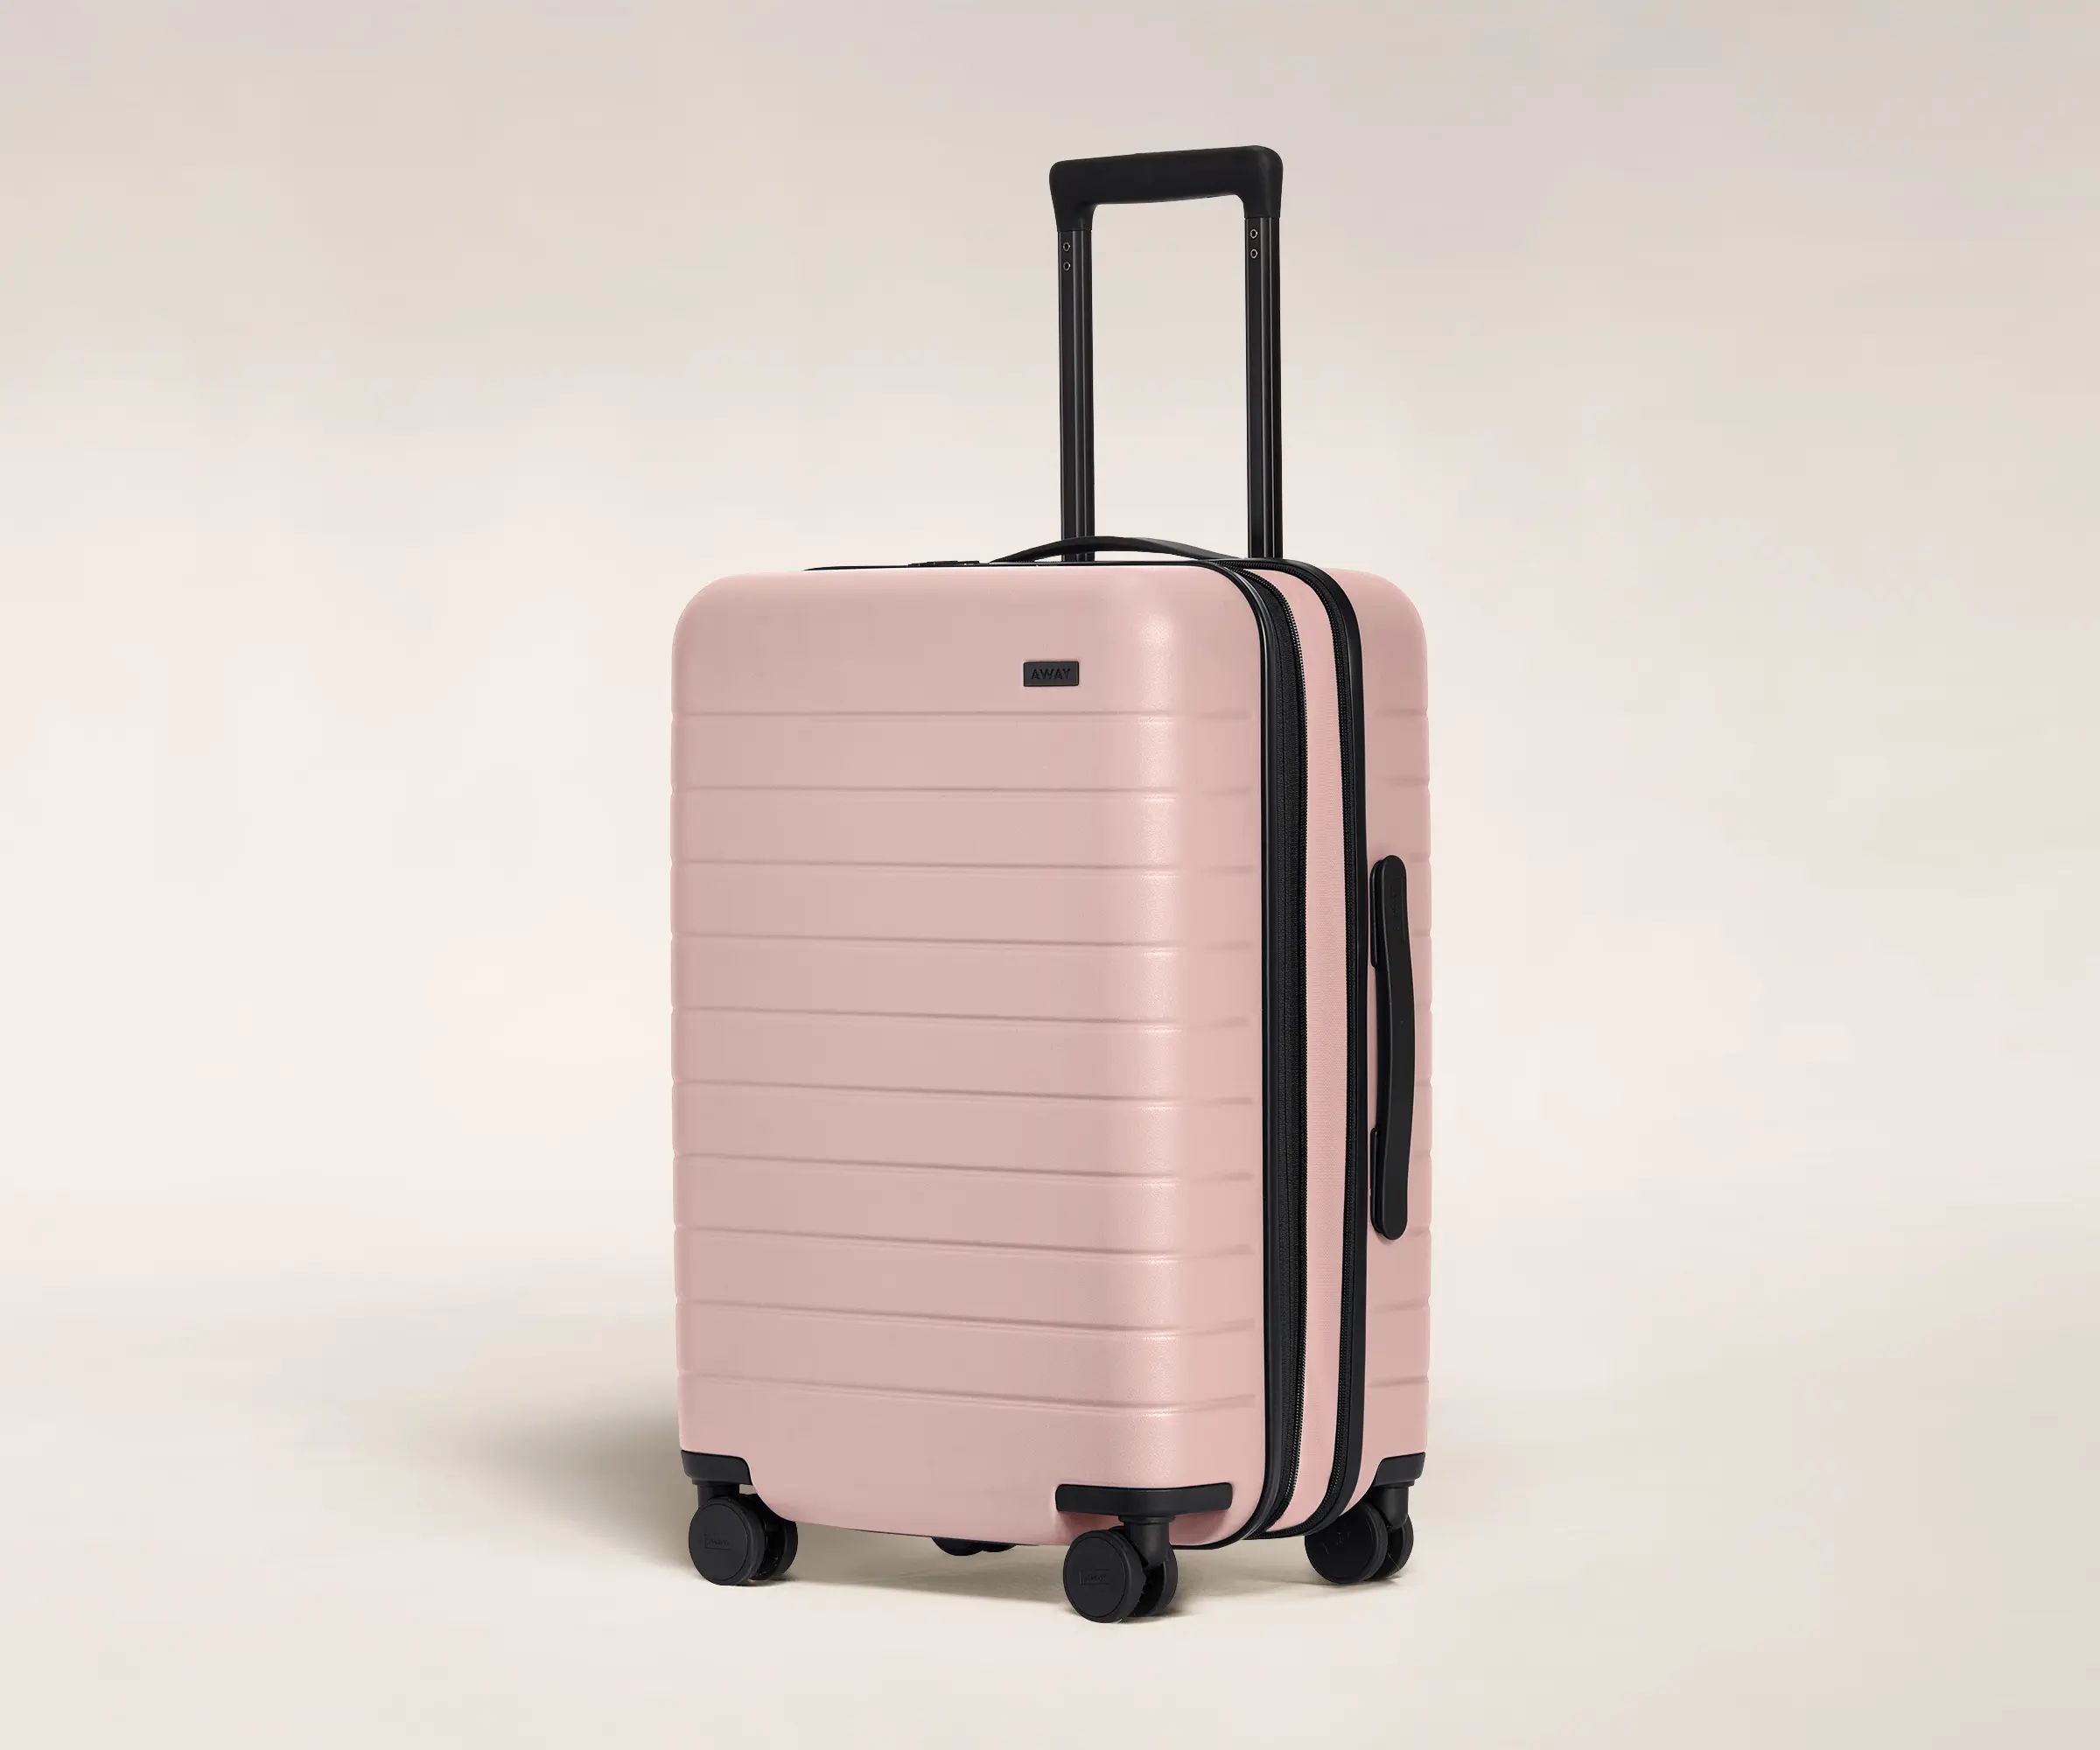 Discover premium luggage | Away